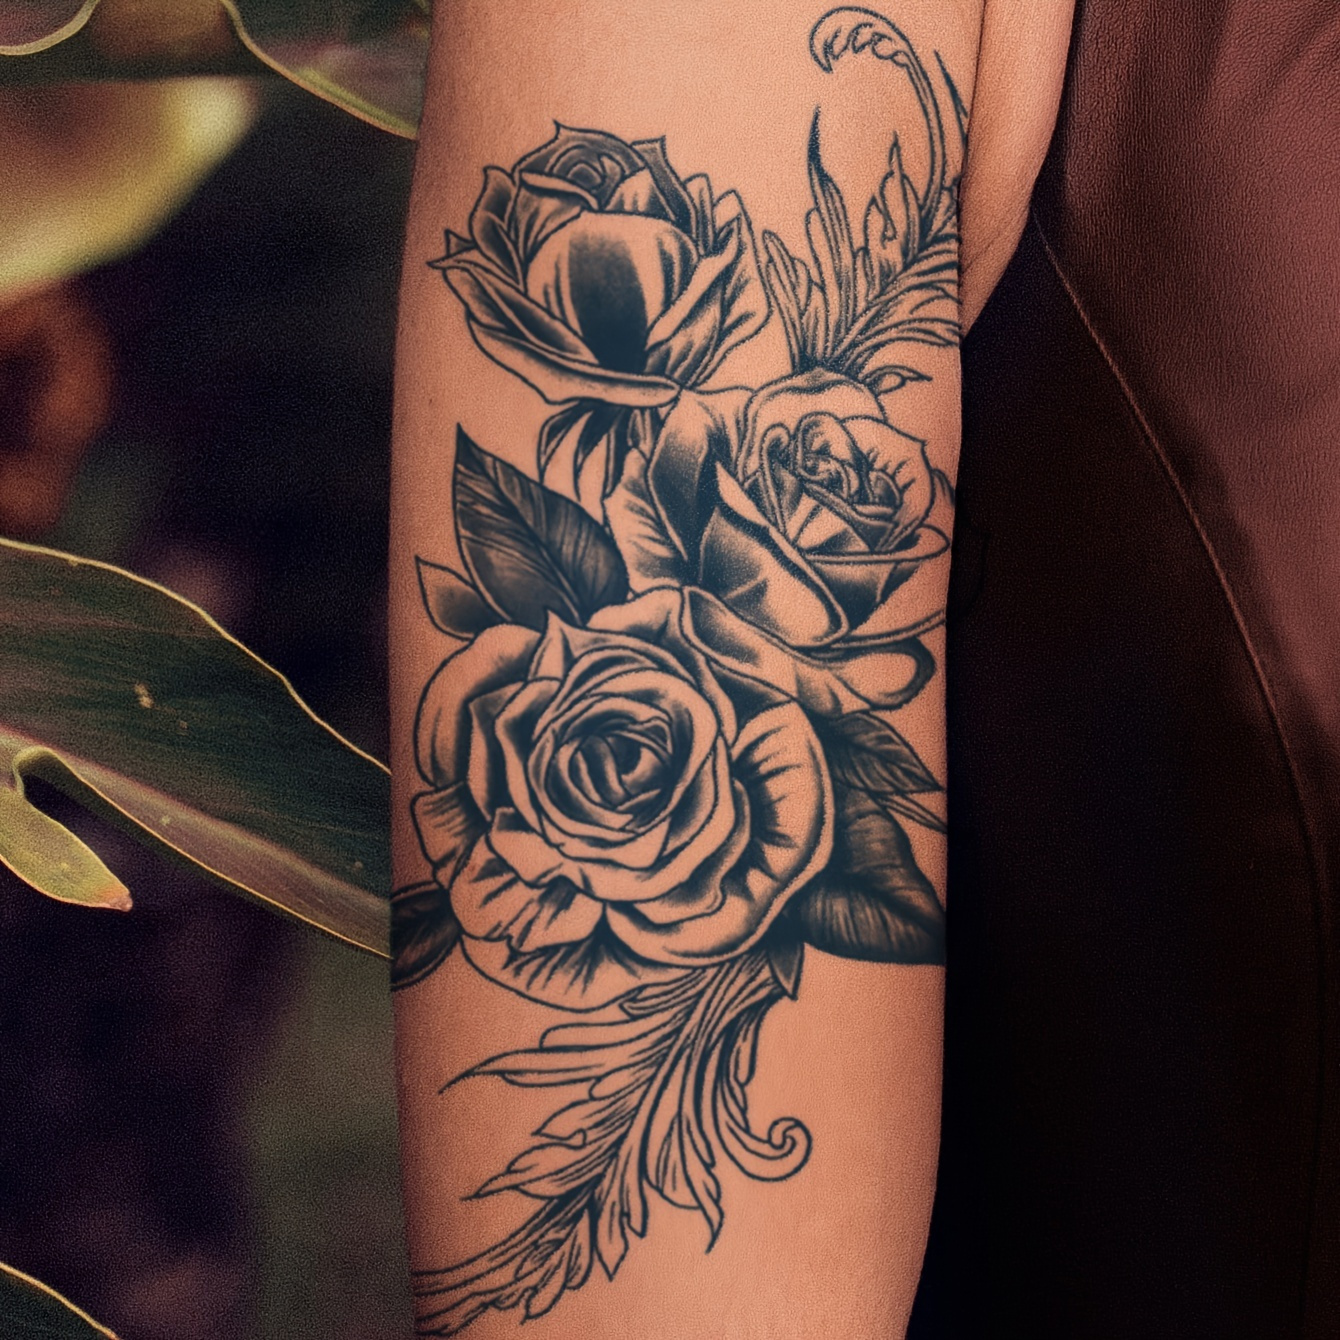 Triangle Flower Tattoo Rose Peony Black Sketch Rose Daisy Sunflower Leaf  Body Waist Arm Neck Temporary Art Tattoos Bkseries 